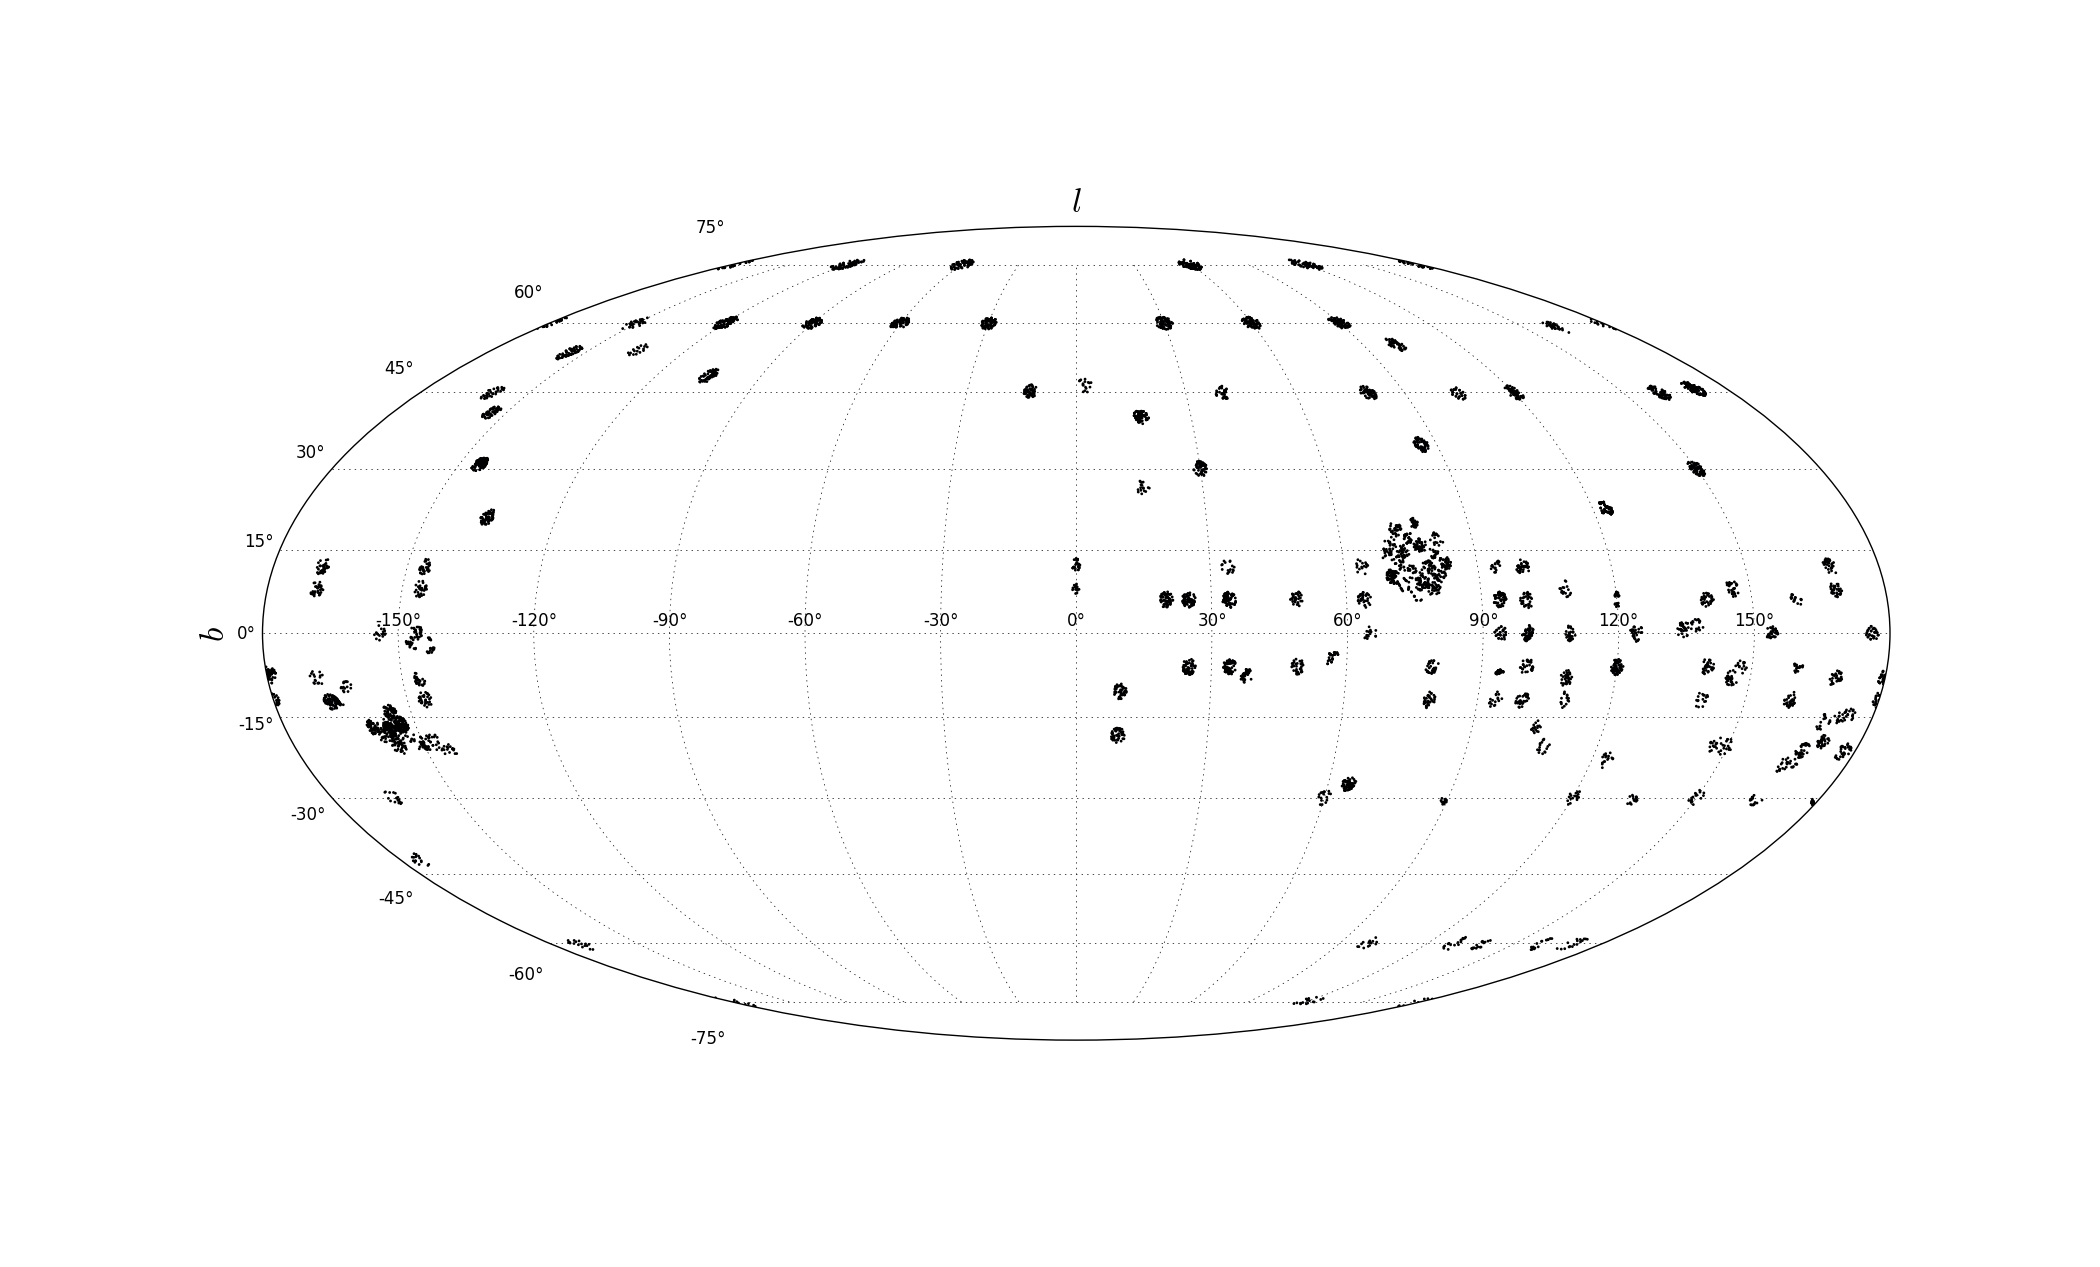 MaStar galactic coordinate sky distribution